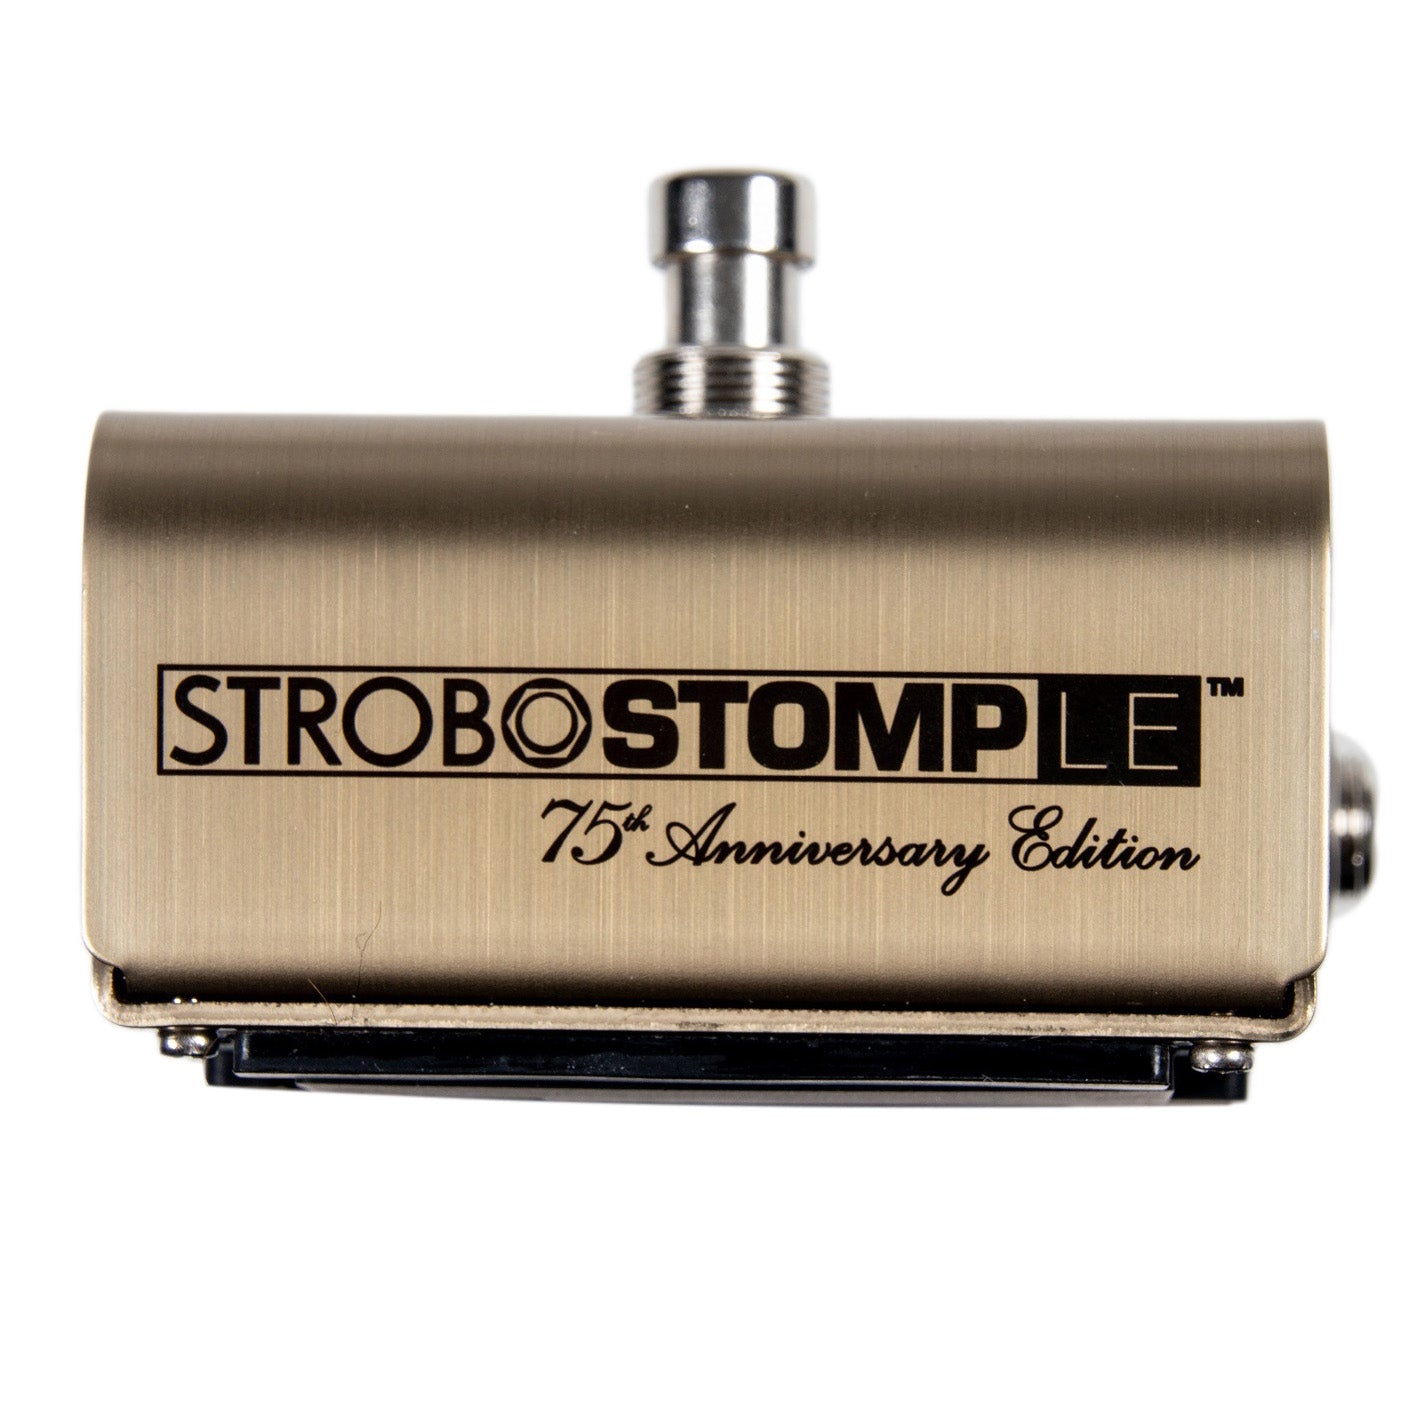 Peterson StroboStomp LE 75th Anniversary Limited Edition Pedal Tuner